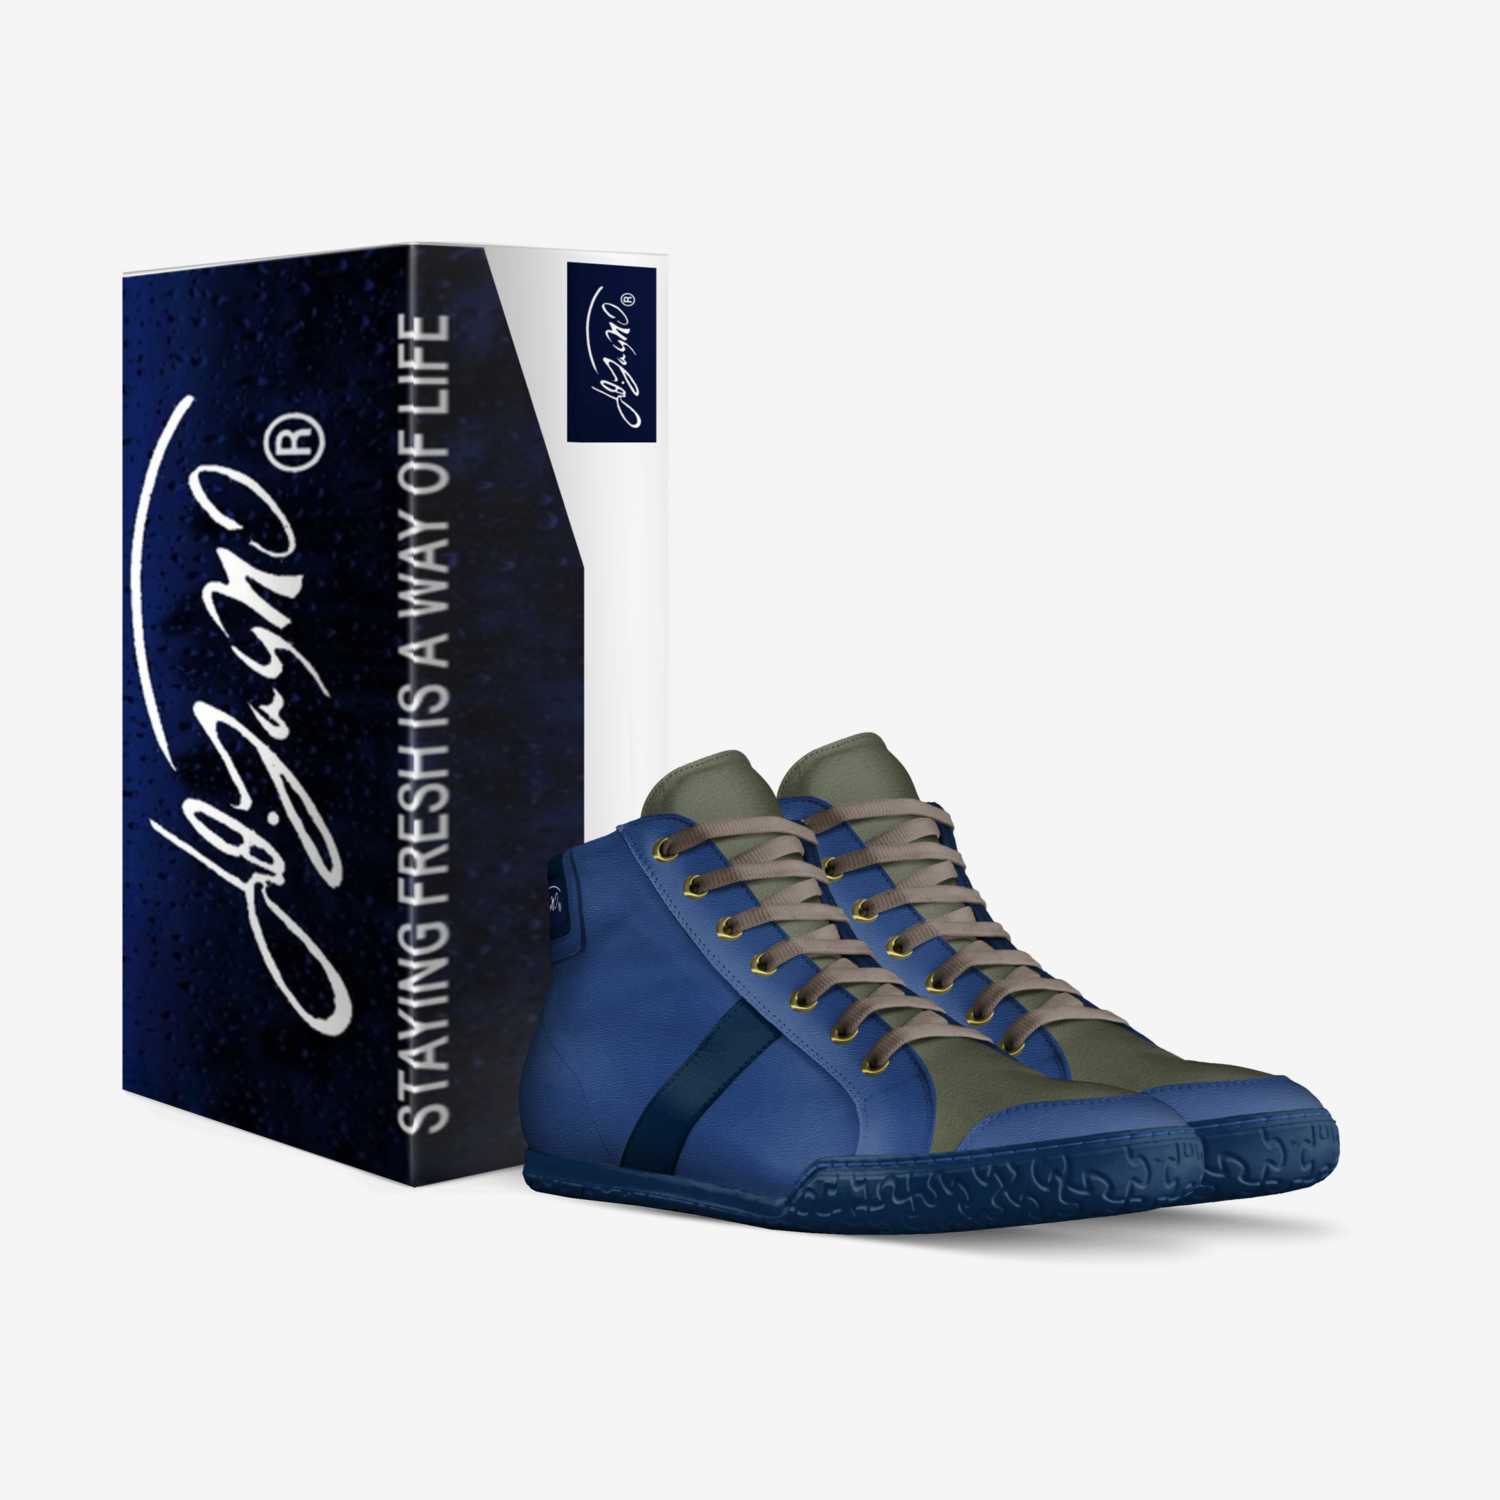 Jo.jayno  custom made in Italy shoes by Jo Jayno | Box view